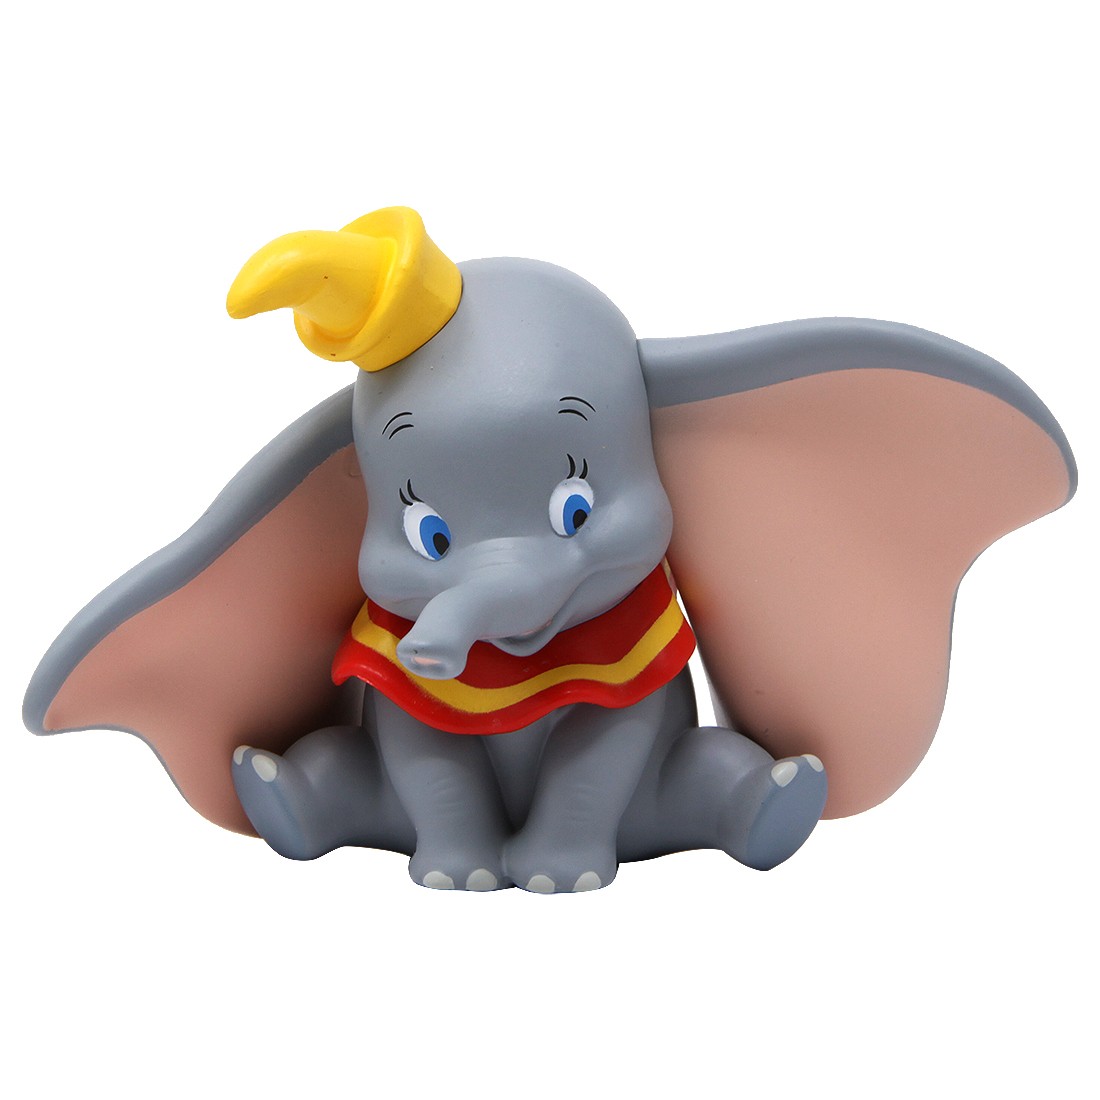 Medicom UDF Disney Series 8 Dumbo Ultra Detail Figure (gray)